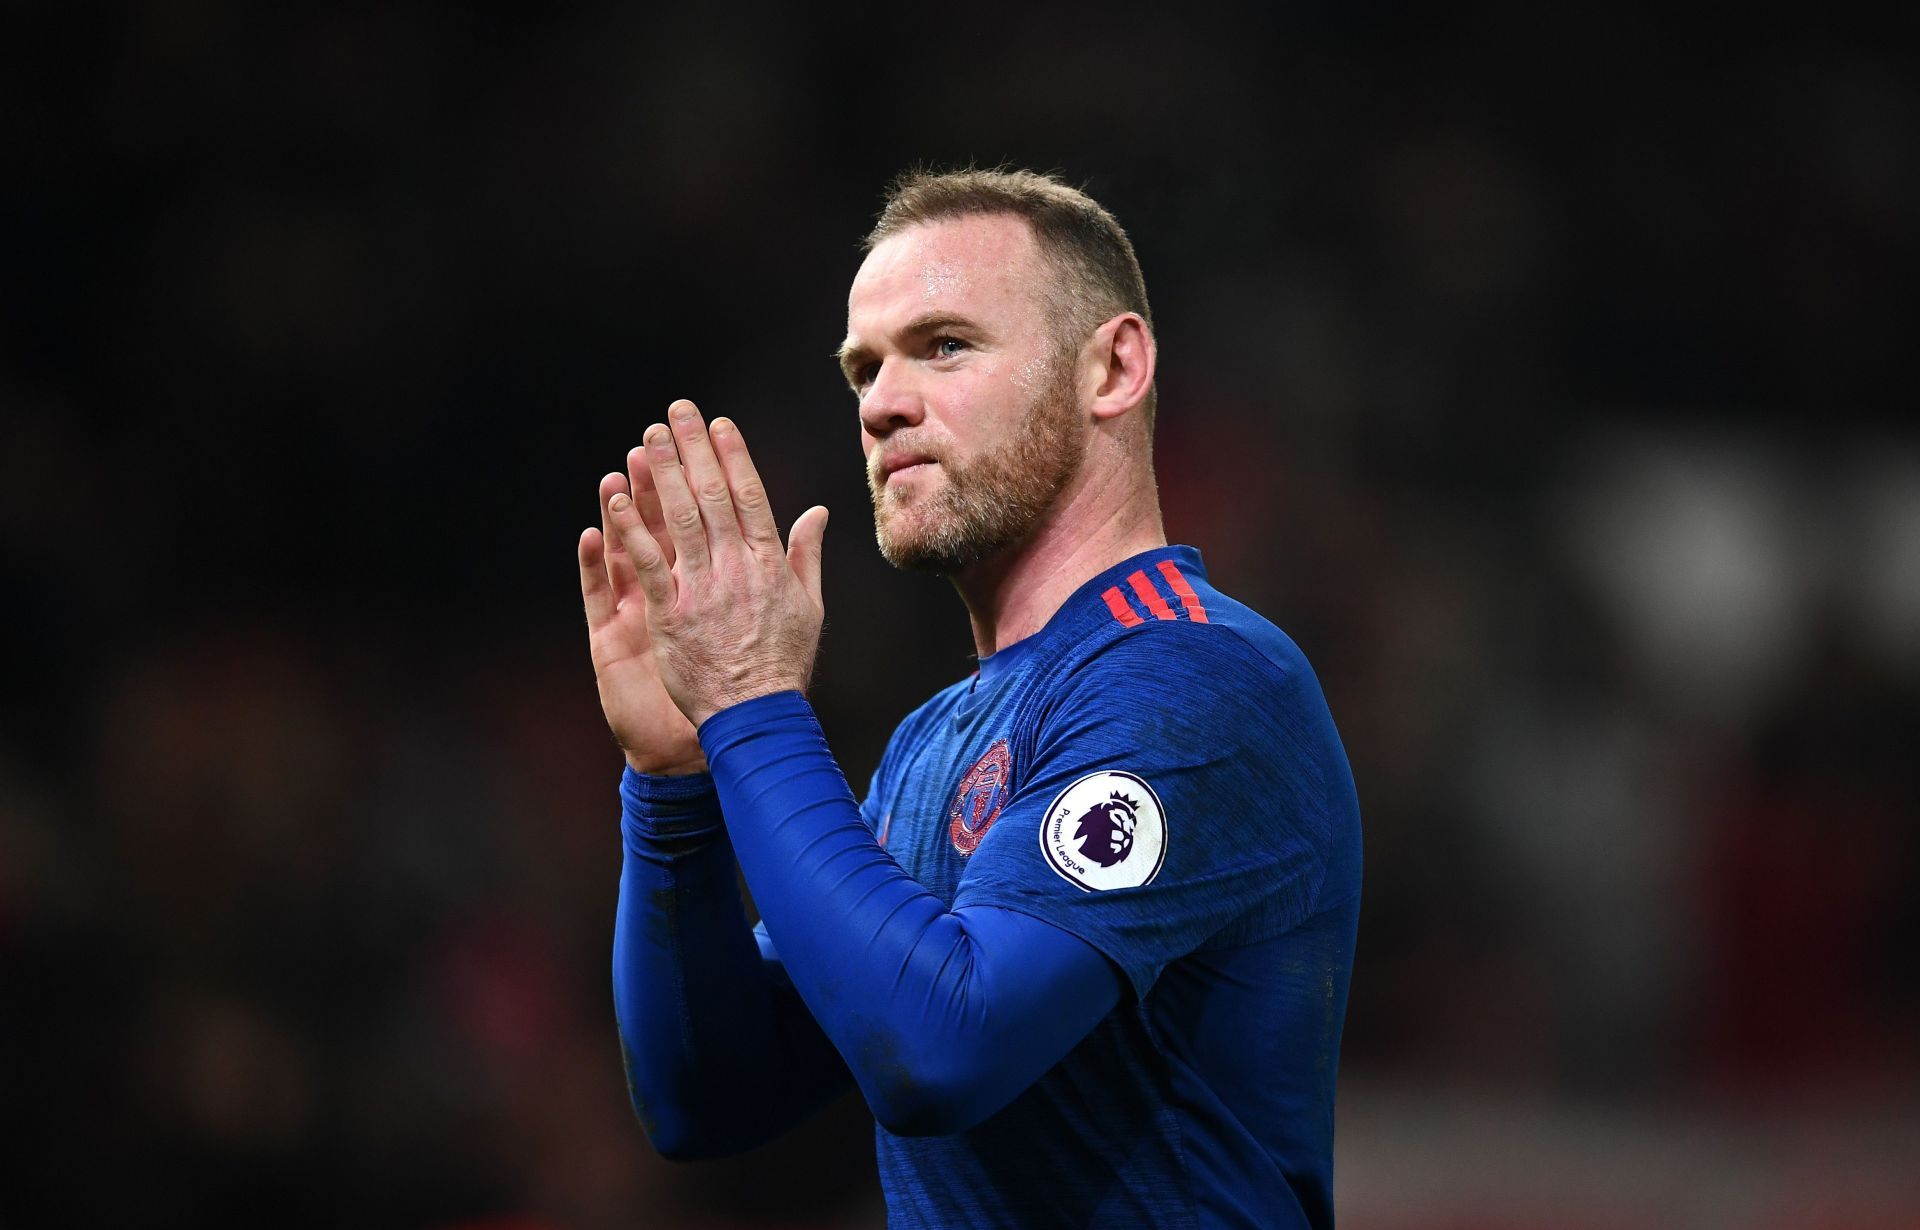 The Premier League needs more players like Wayne Rooney